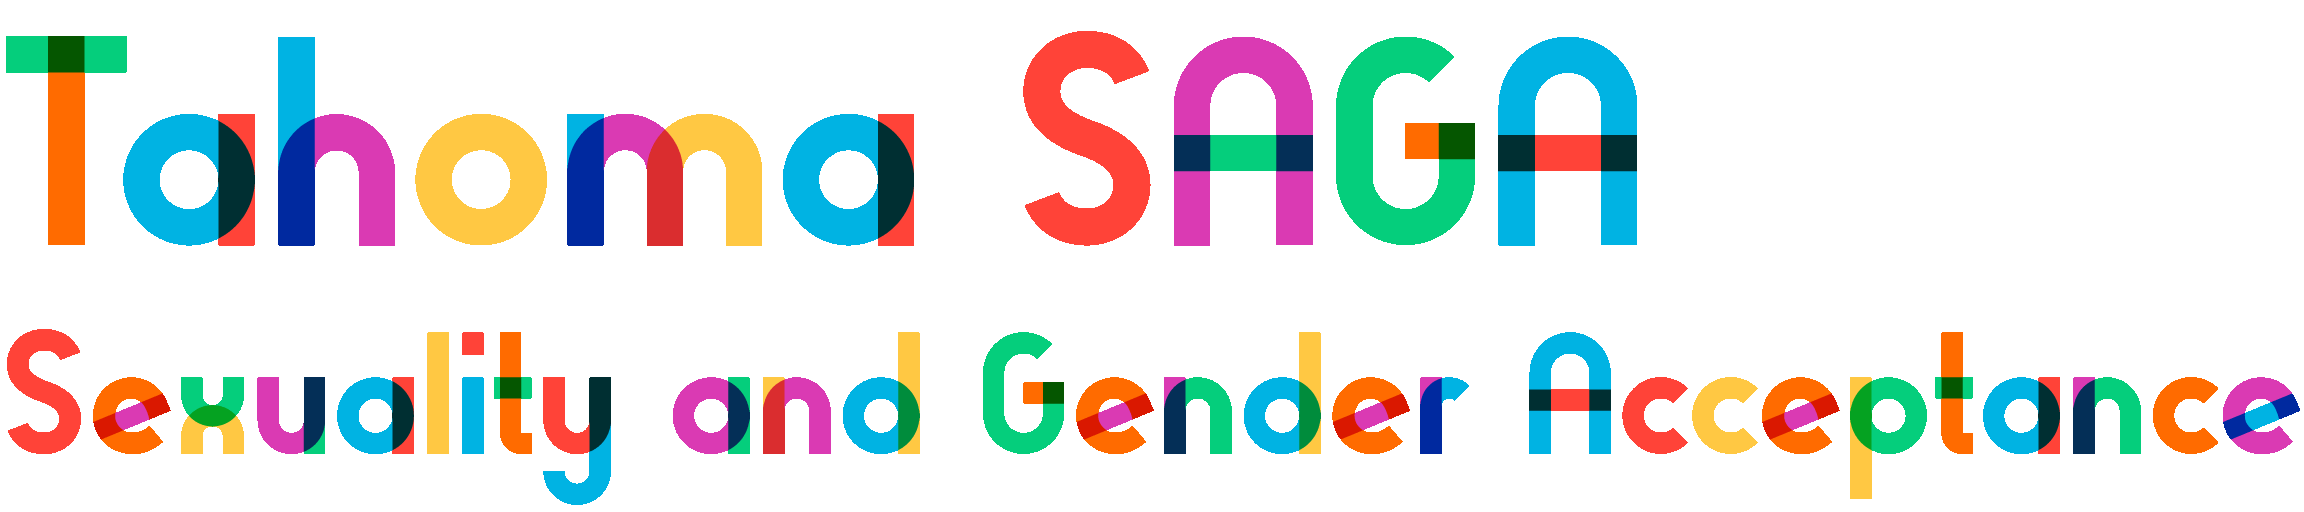 Tahoma SAGA Sexuality And Gender Acceptance